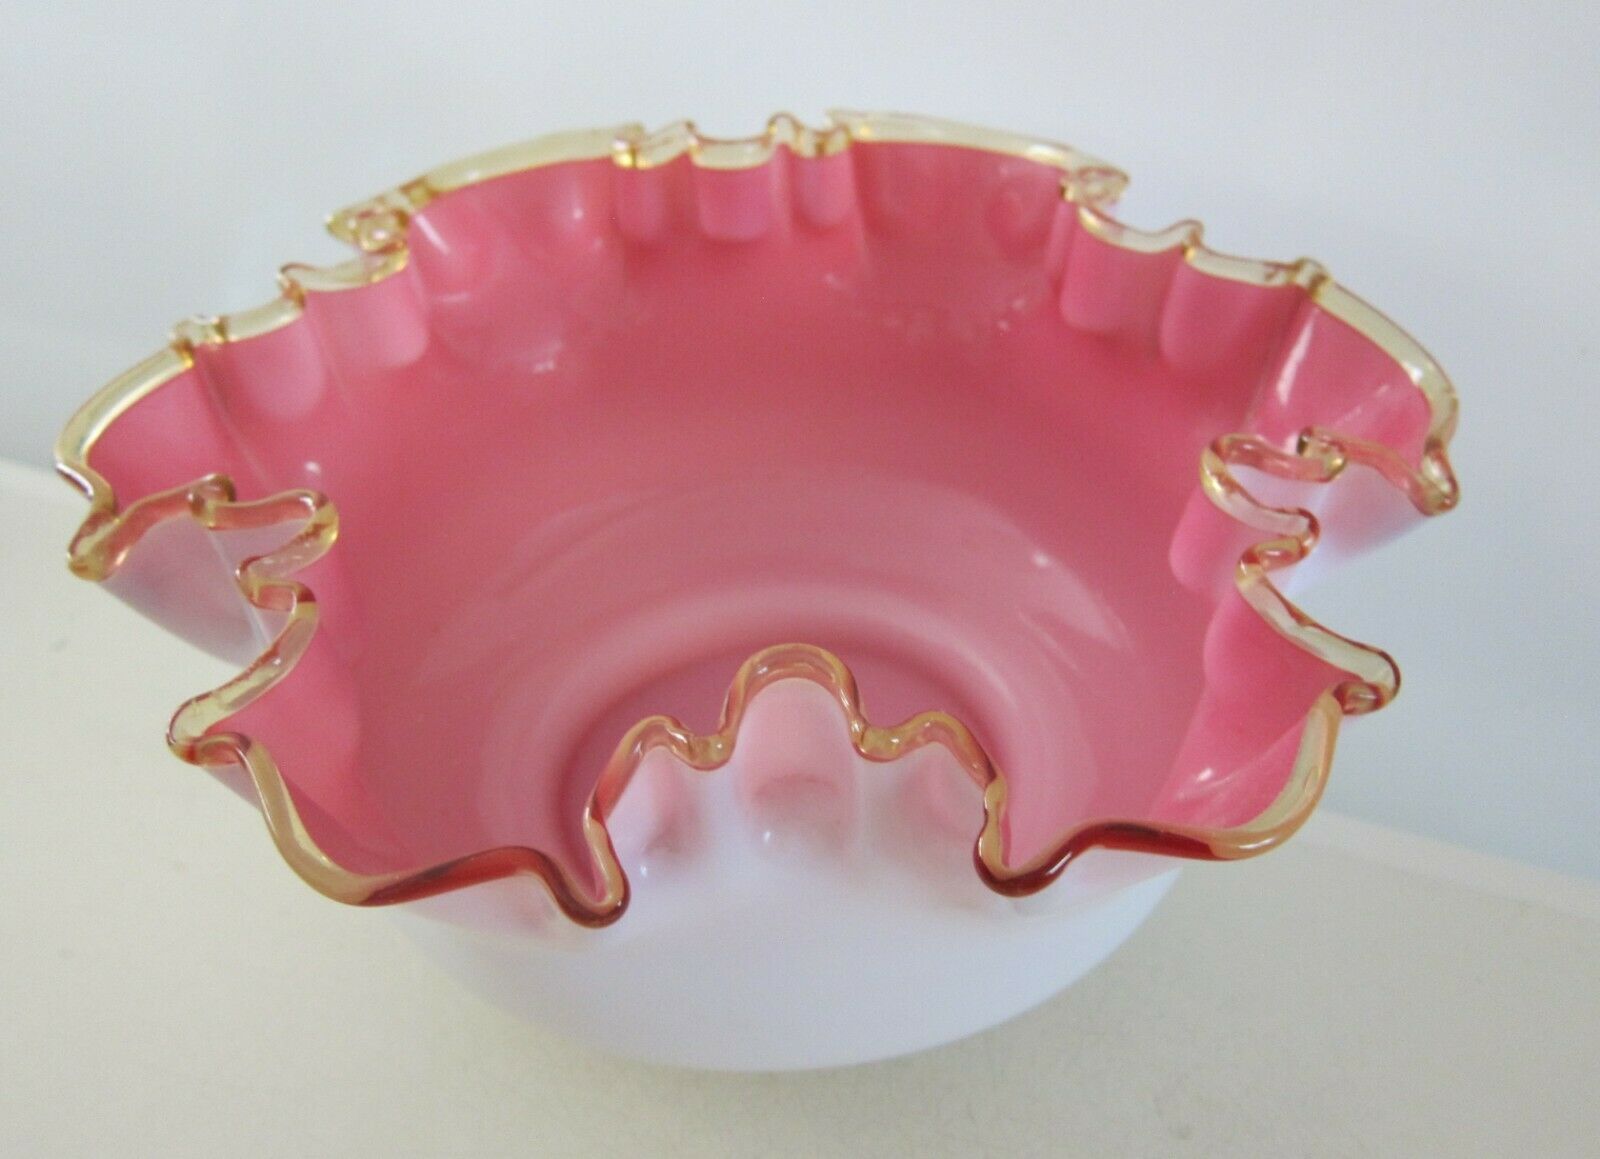 Vintage Fenton Milk Cranberry Cased Glass Bowl  With 10" Across, 4 Ruffled Edge